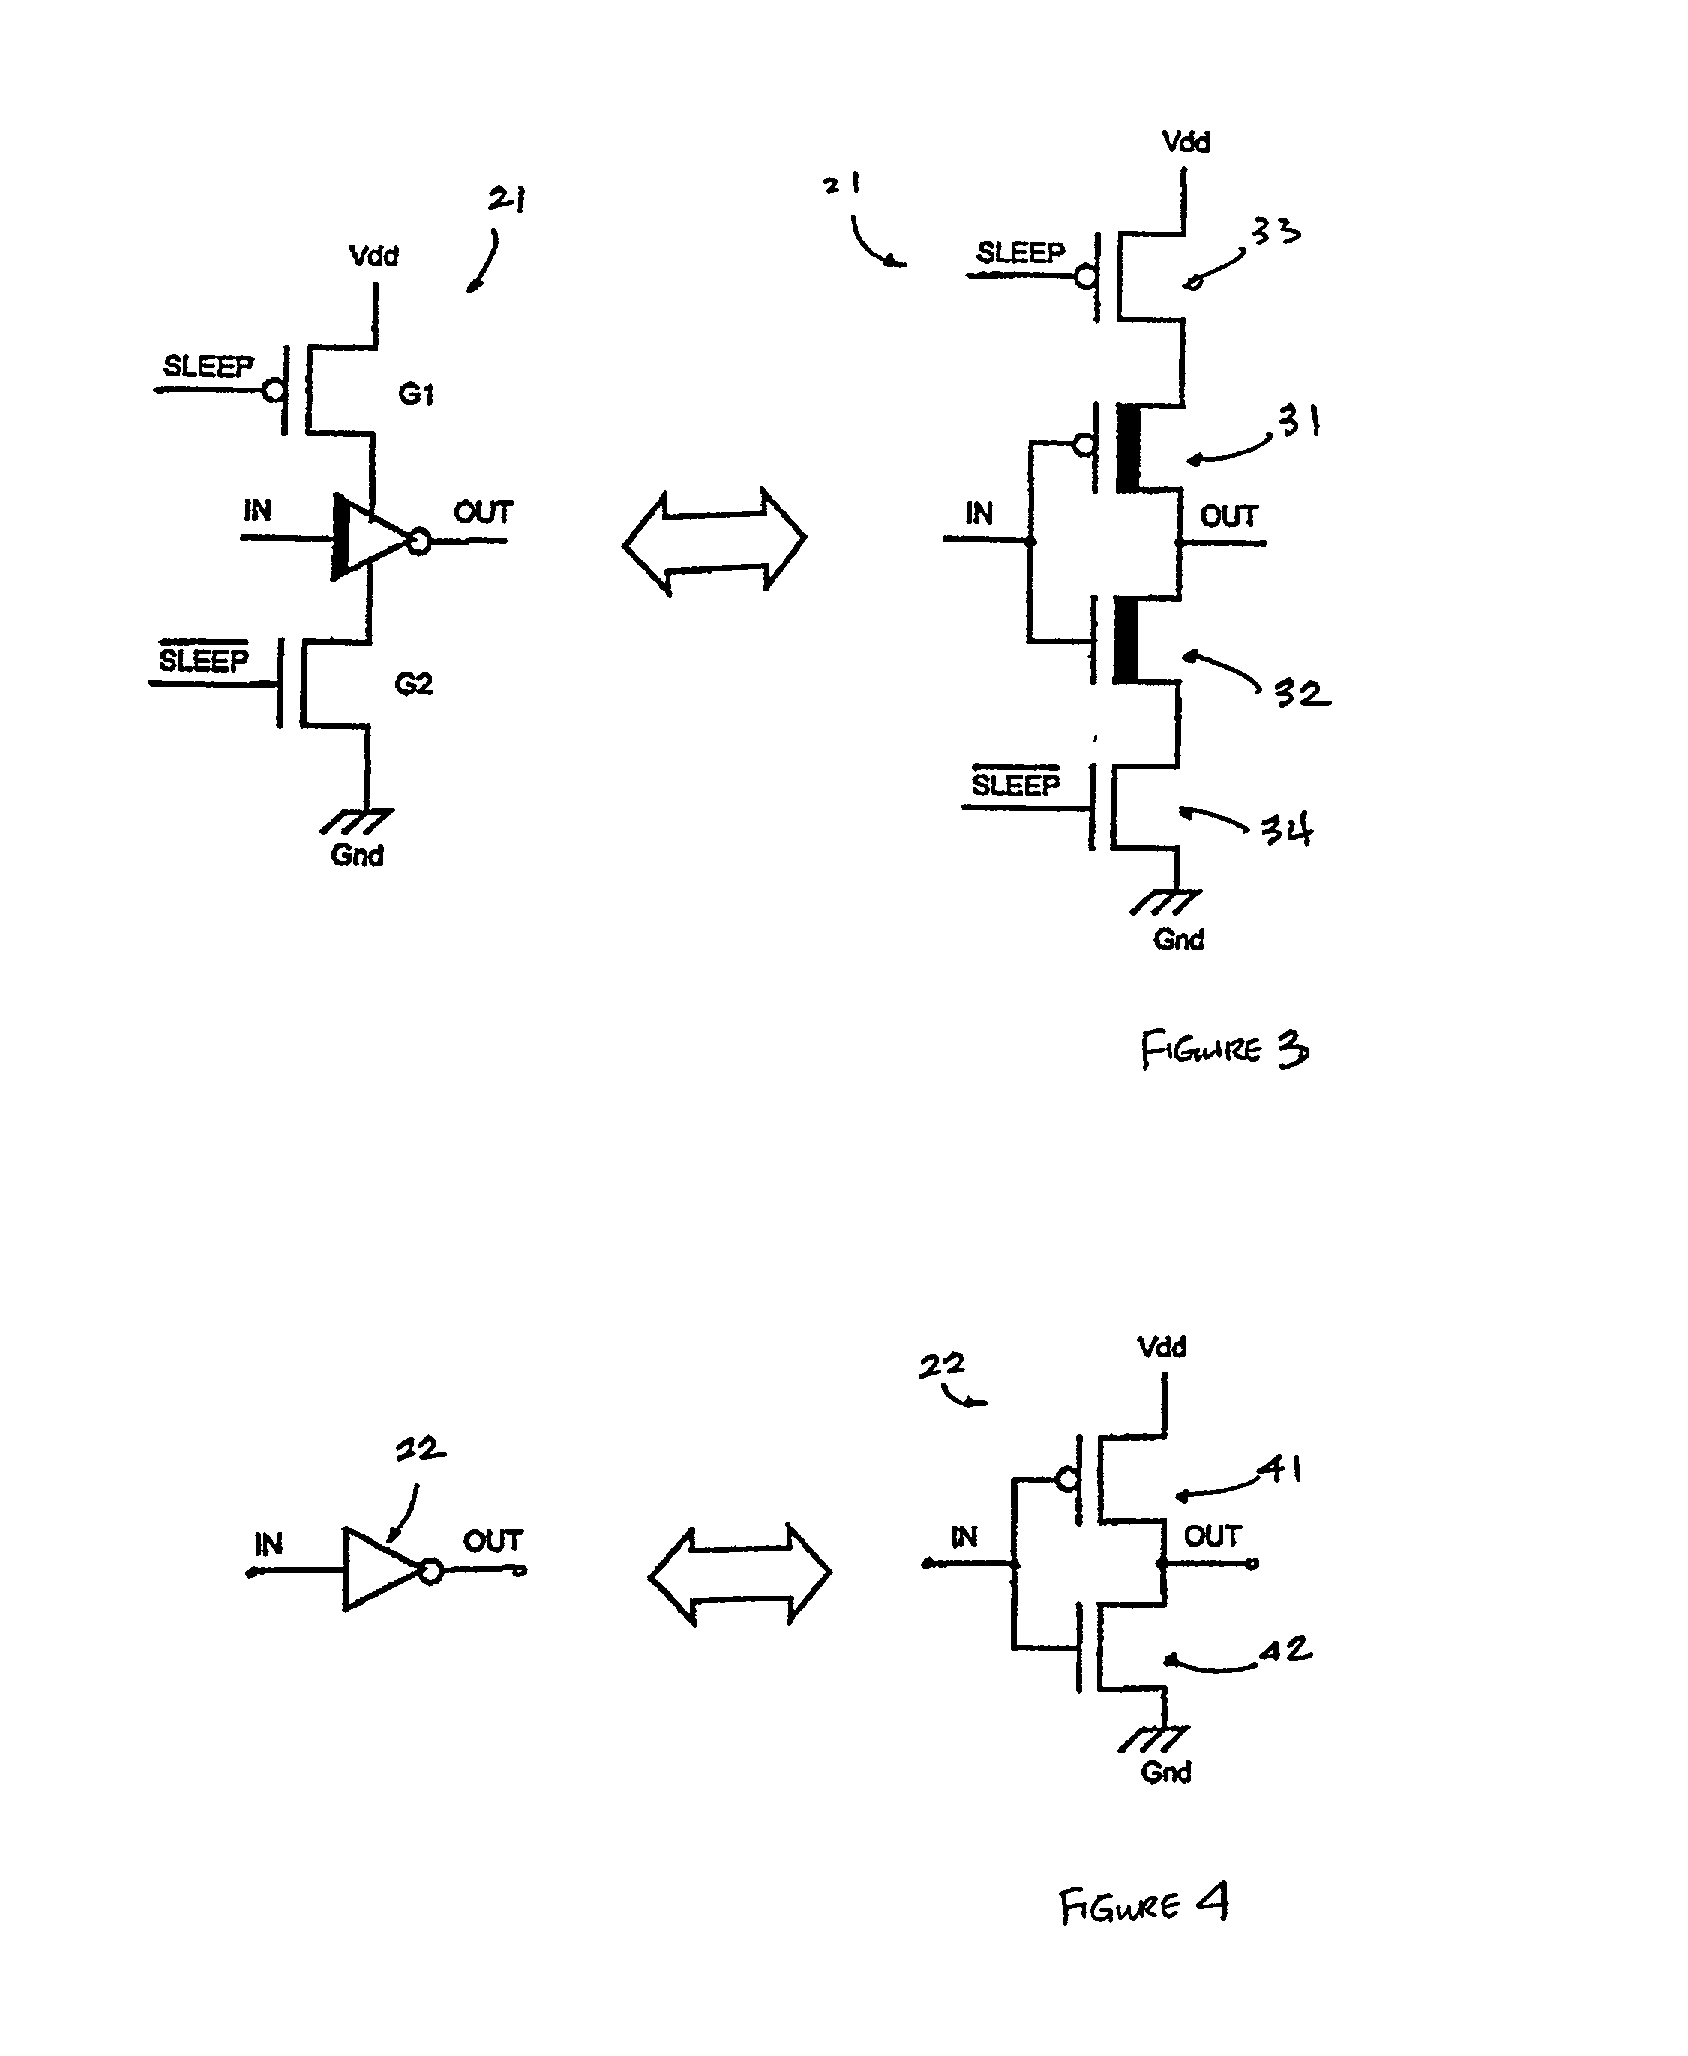 Multi-threshold flip-flop circuit having an outside feedback